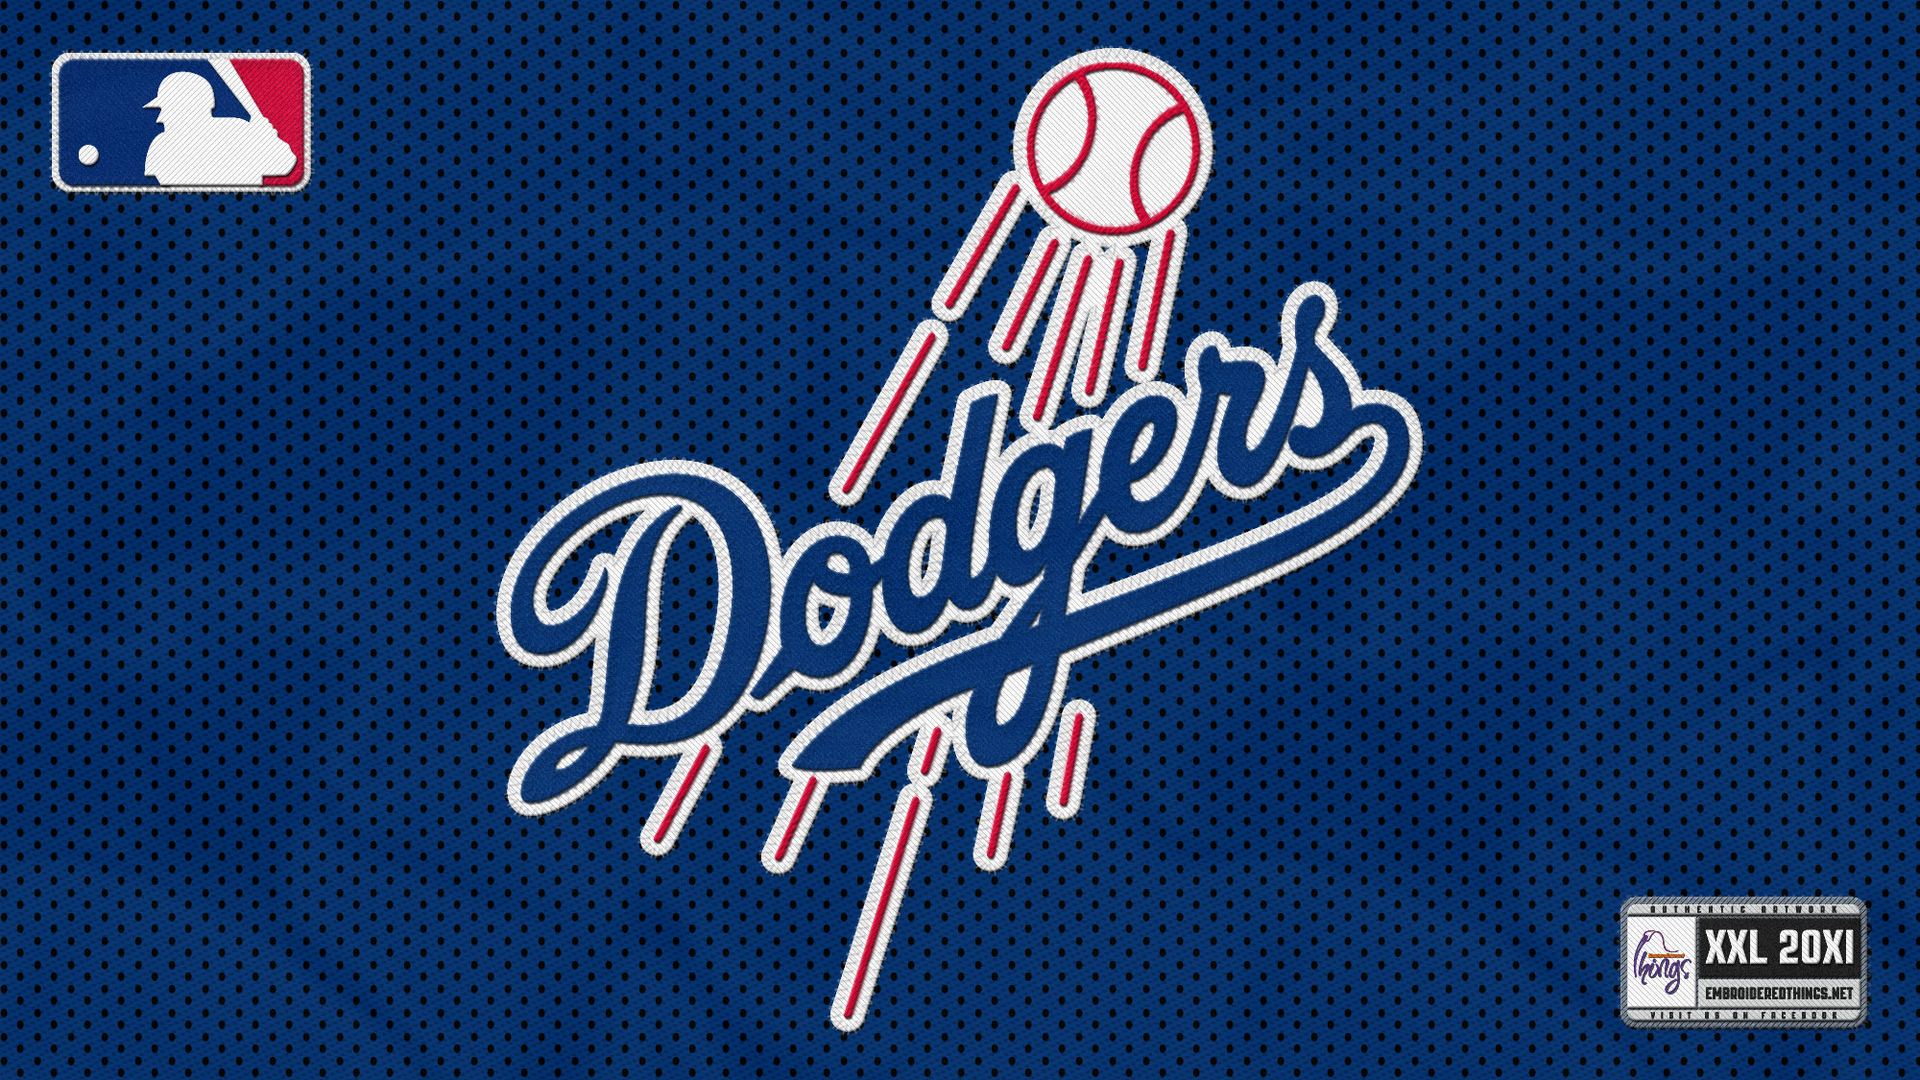 Los Angeles Dodgers wallpaper hd free download